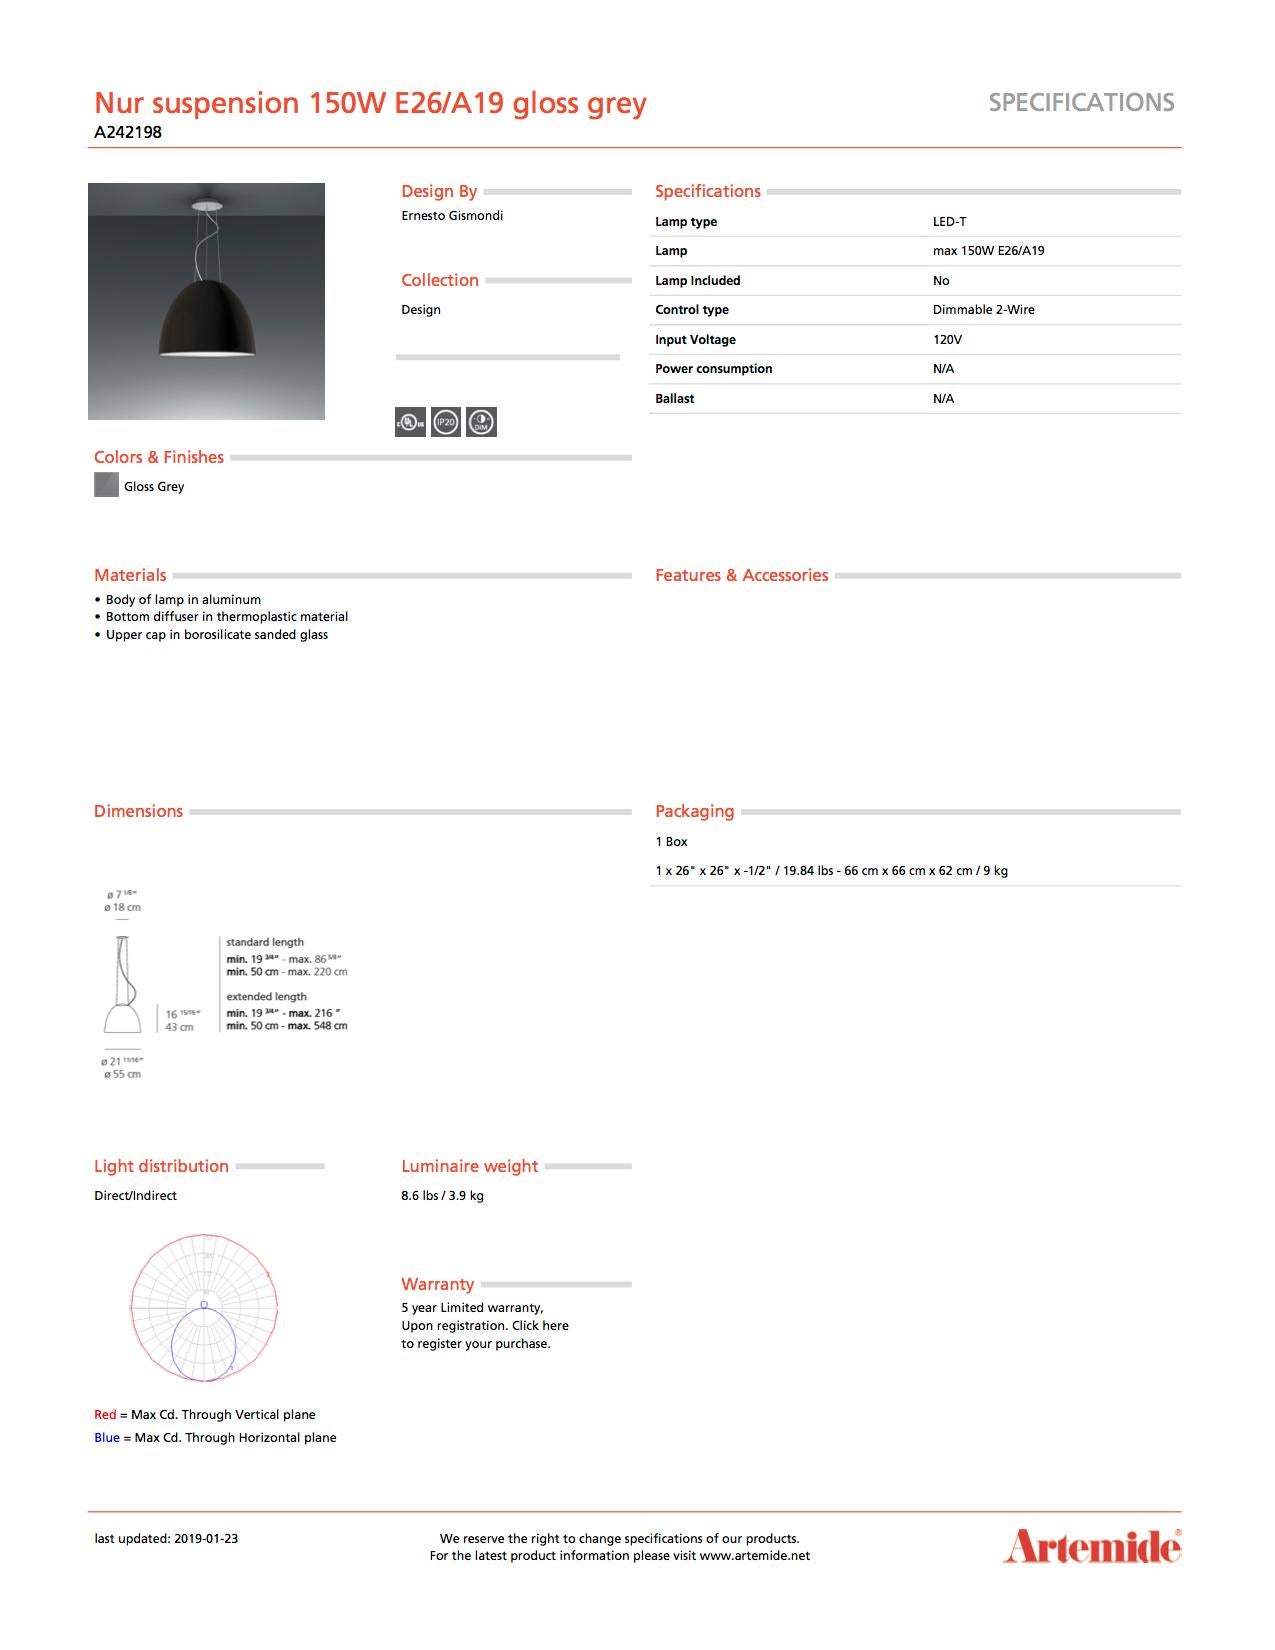 Italian Artemide Nur Suspension Light 150W E26/A19 in Gloss Grey For Sale